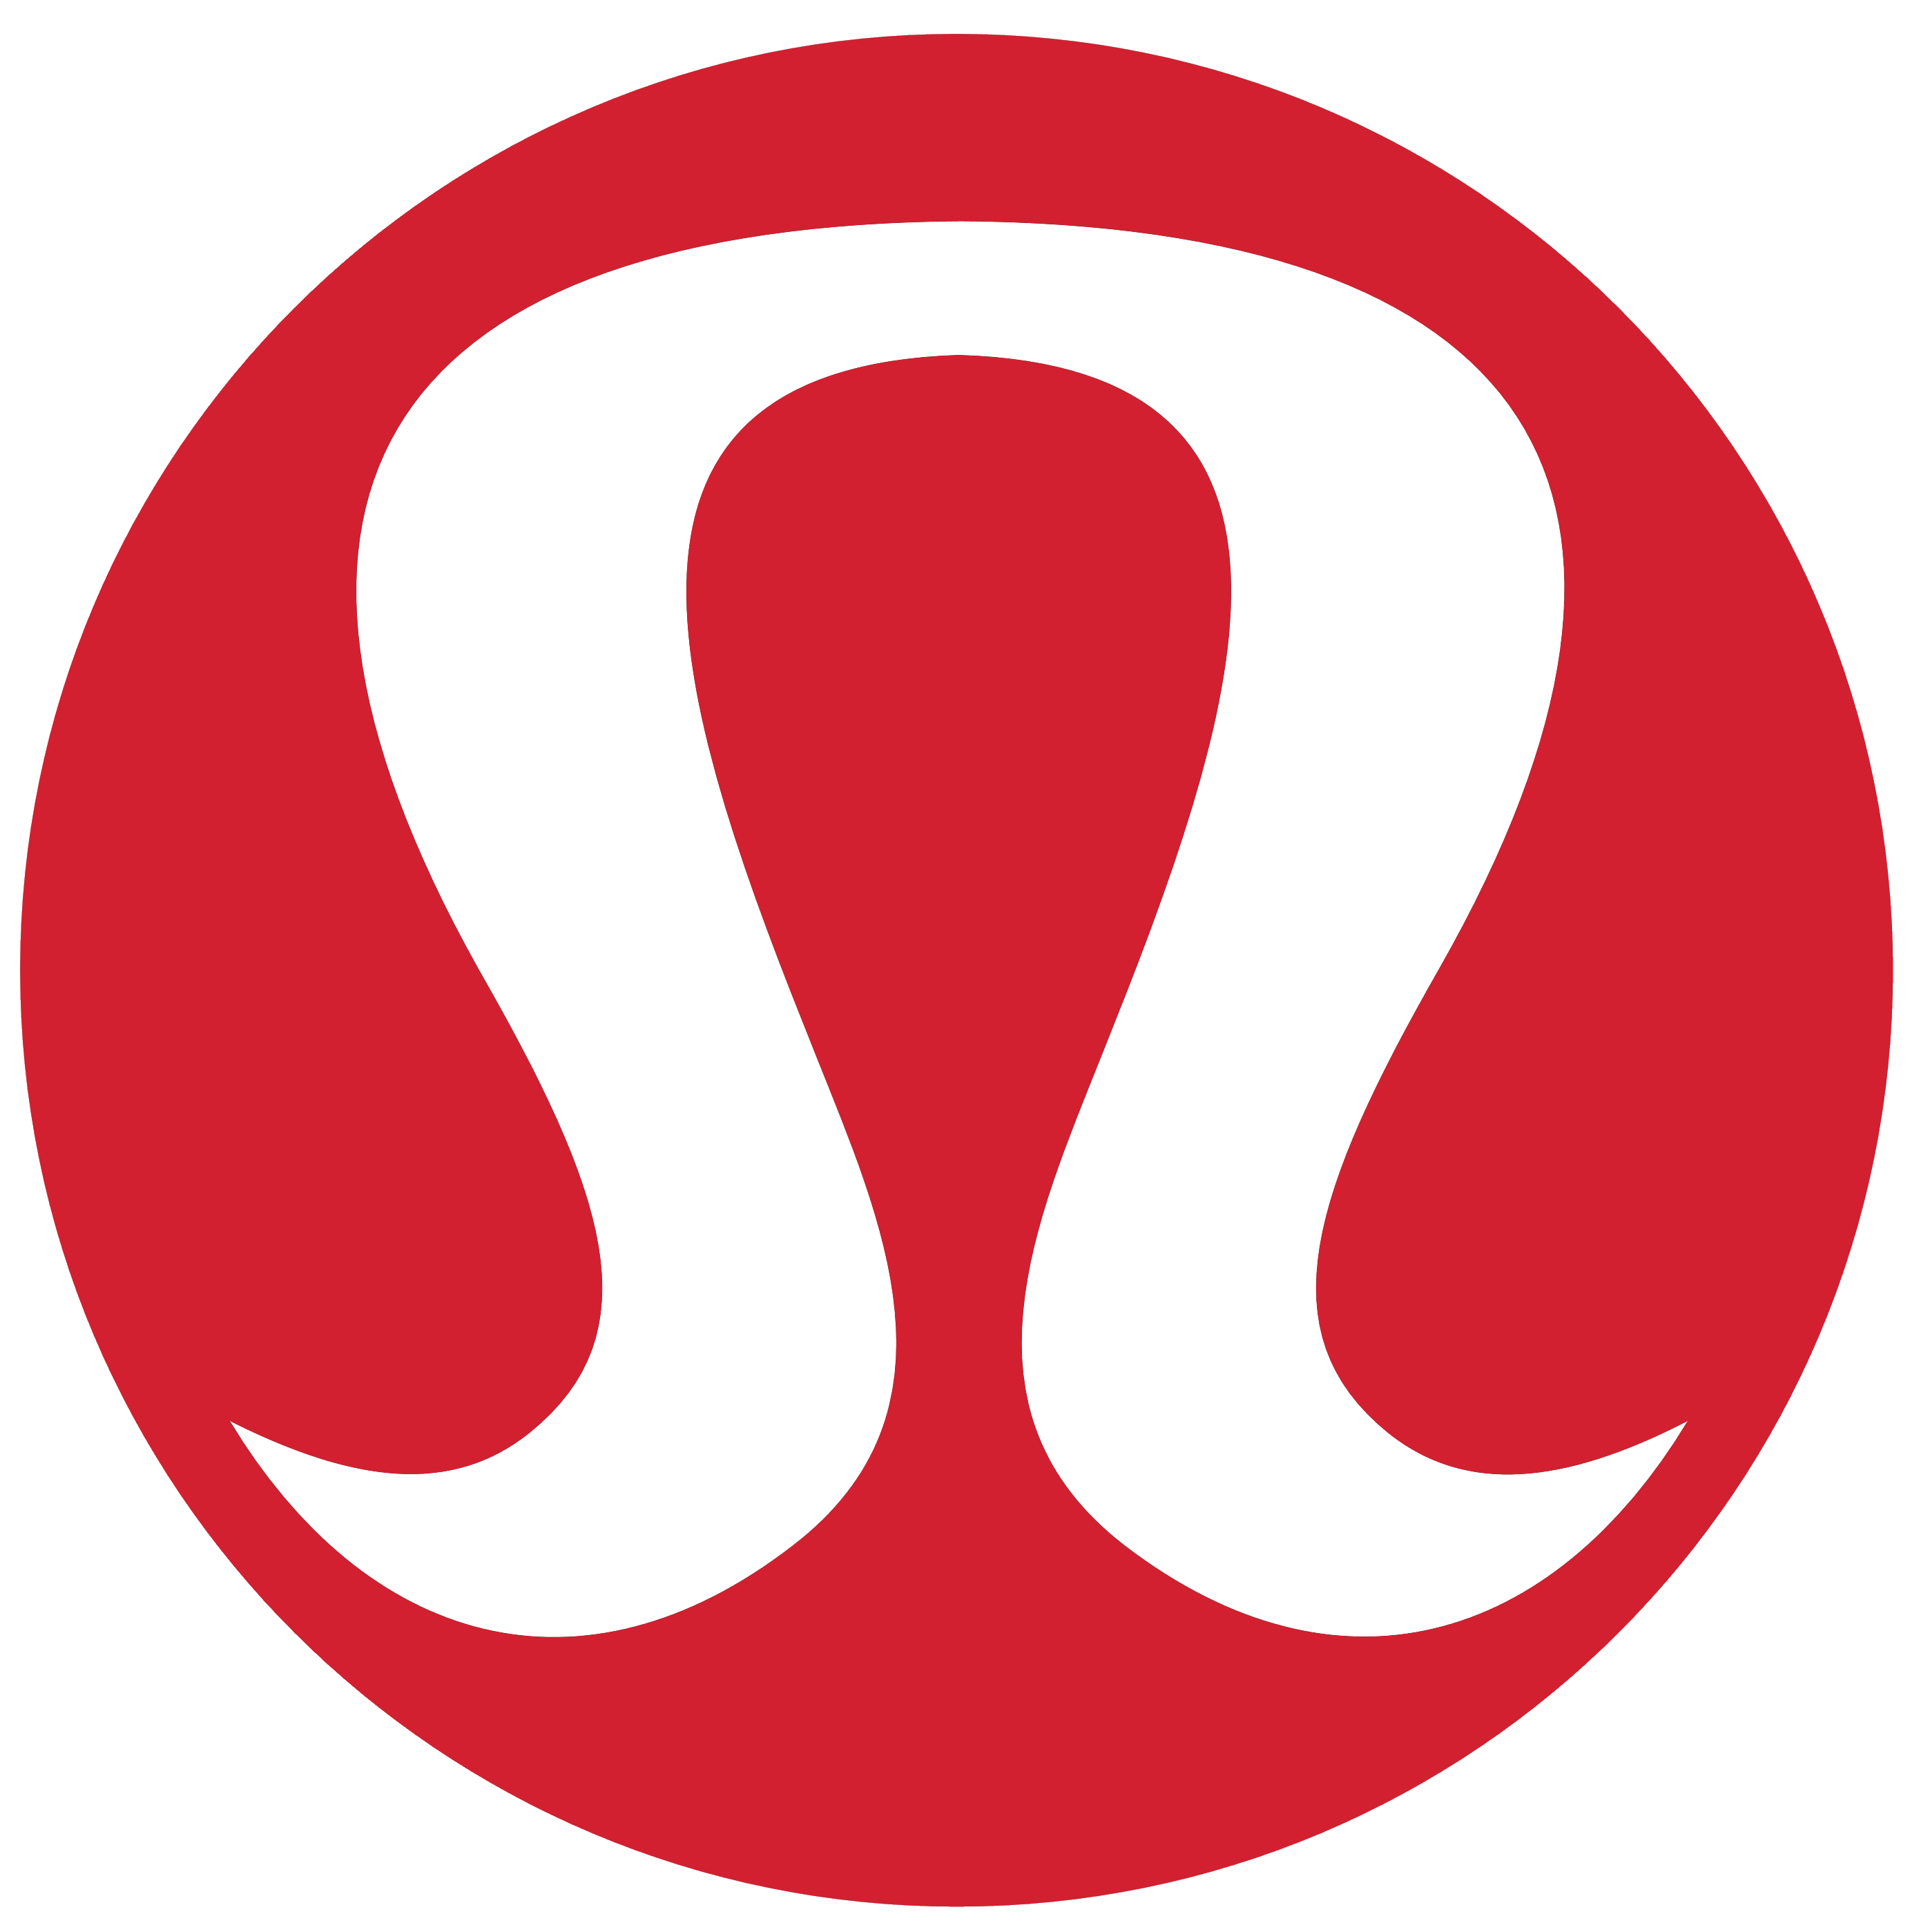 lululemon_logo